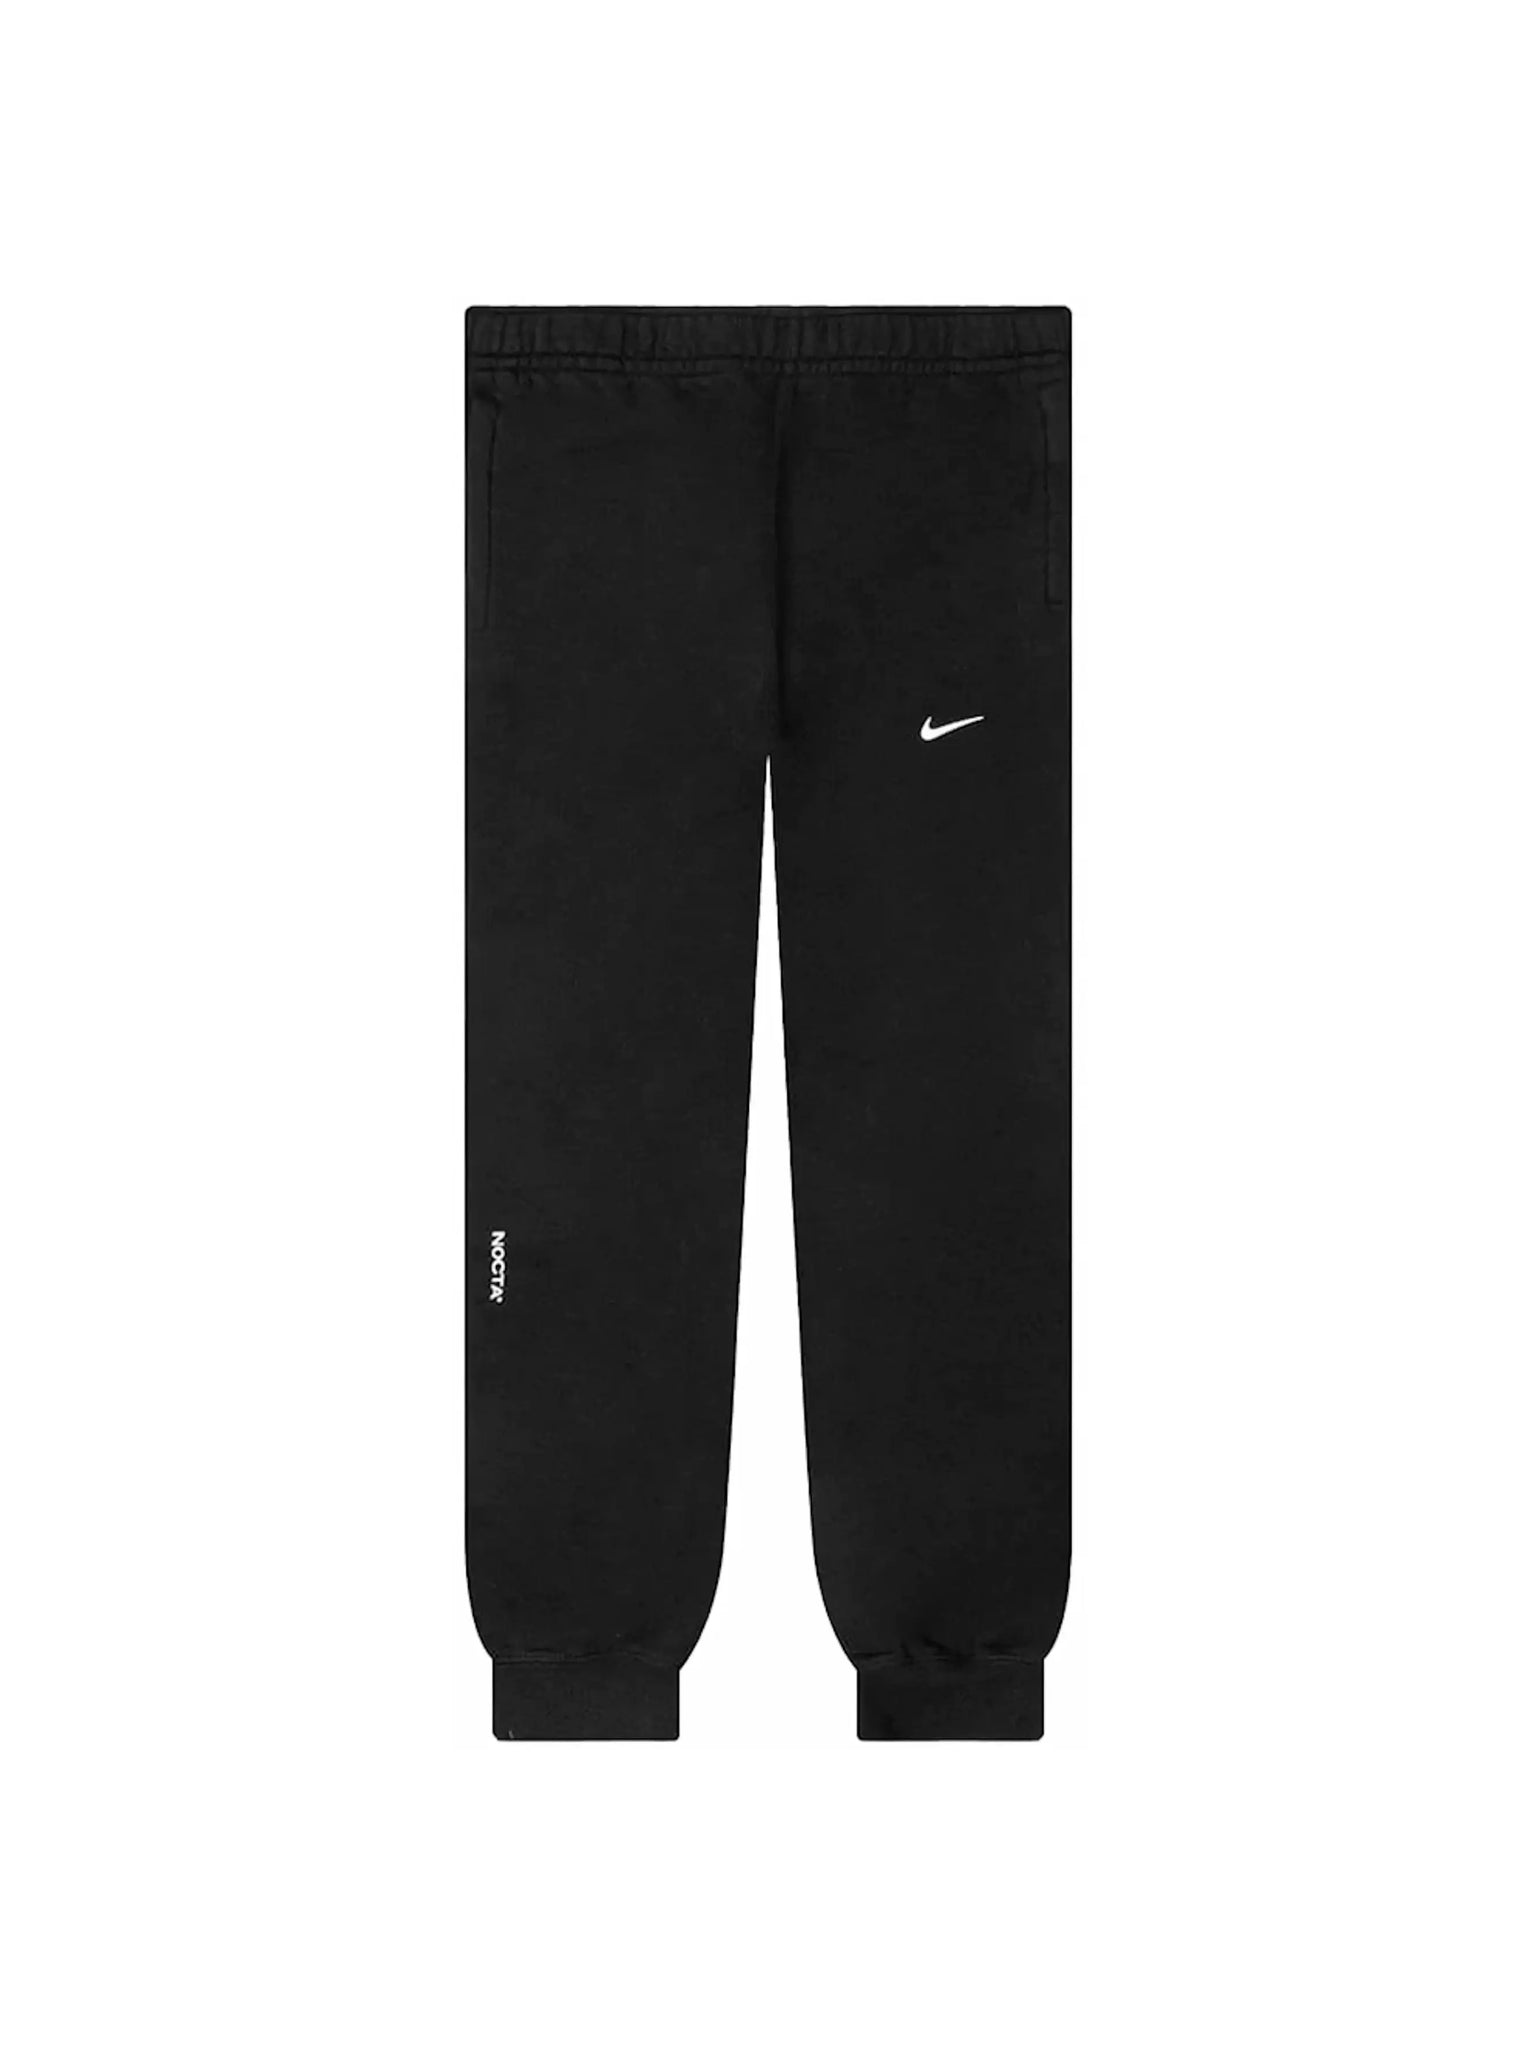 Nike x NOCTA Fleece CS Sweatpant Black in Auckland, New Zealand - Shop name